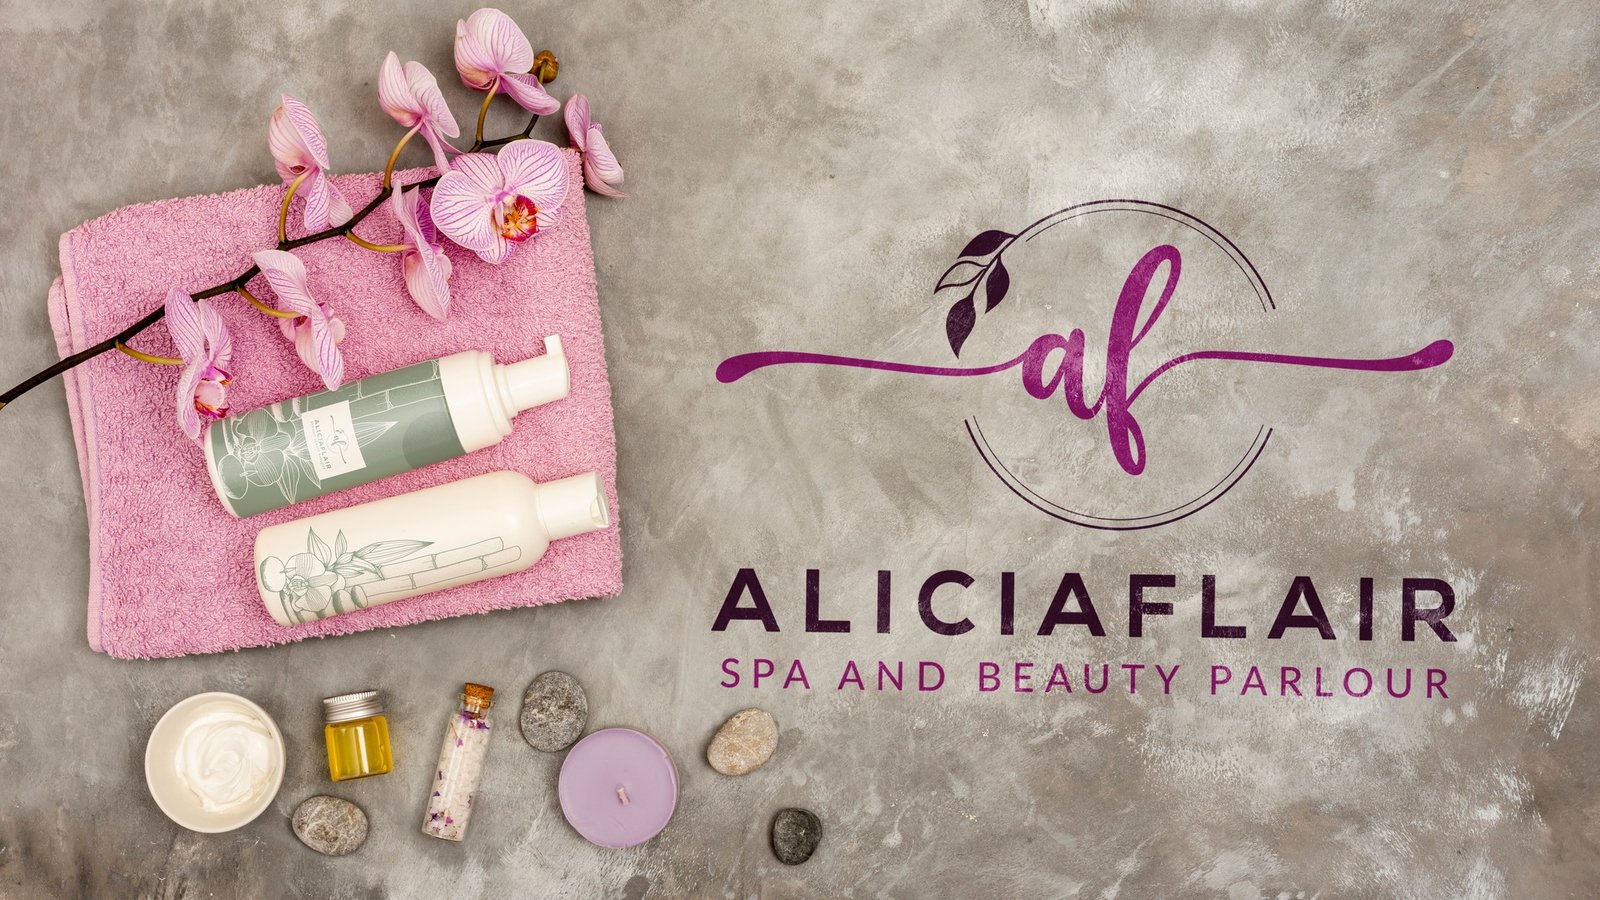 Alicia flair spa beauty parlor